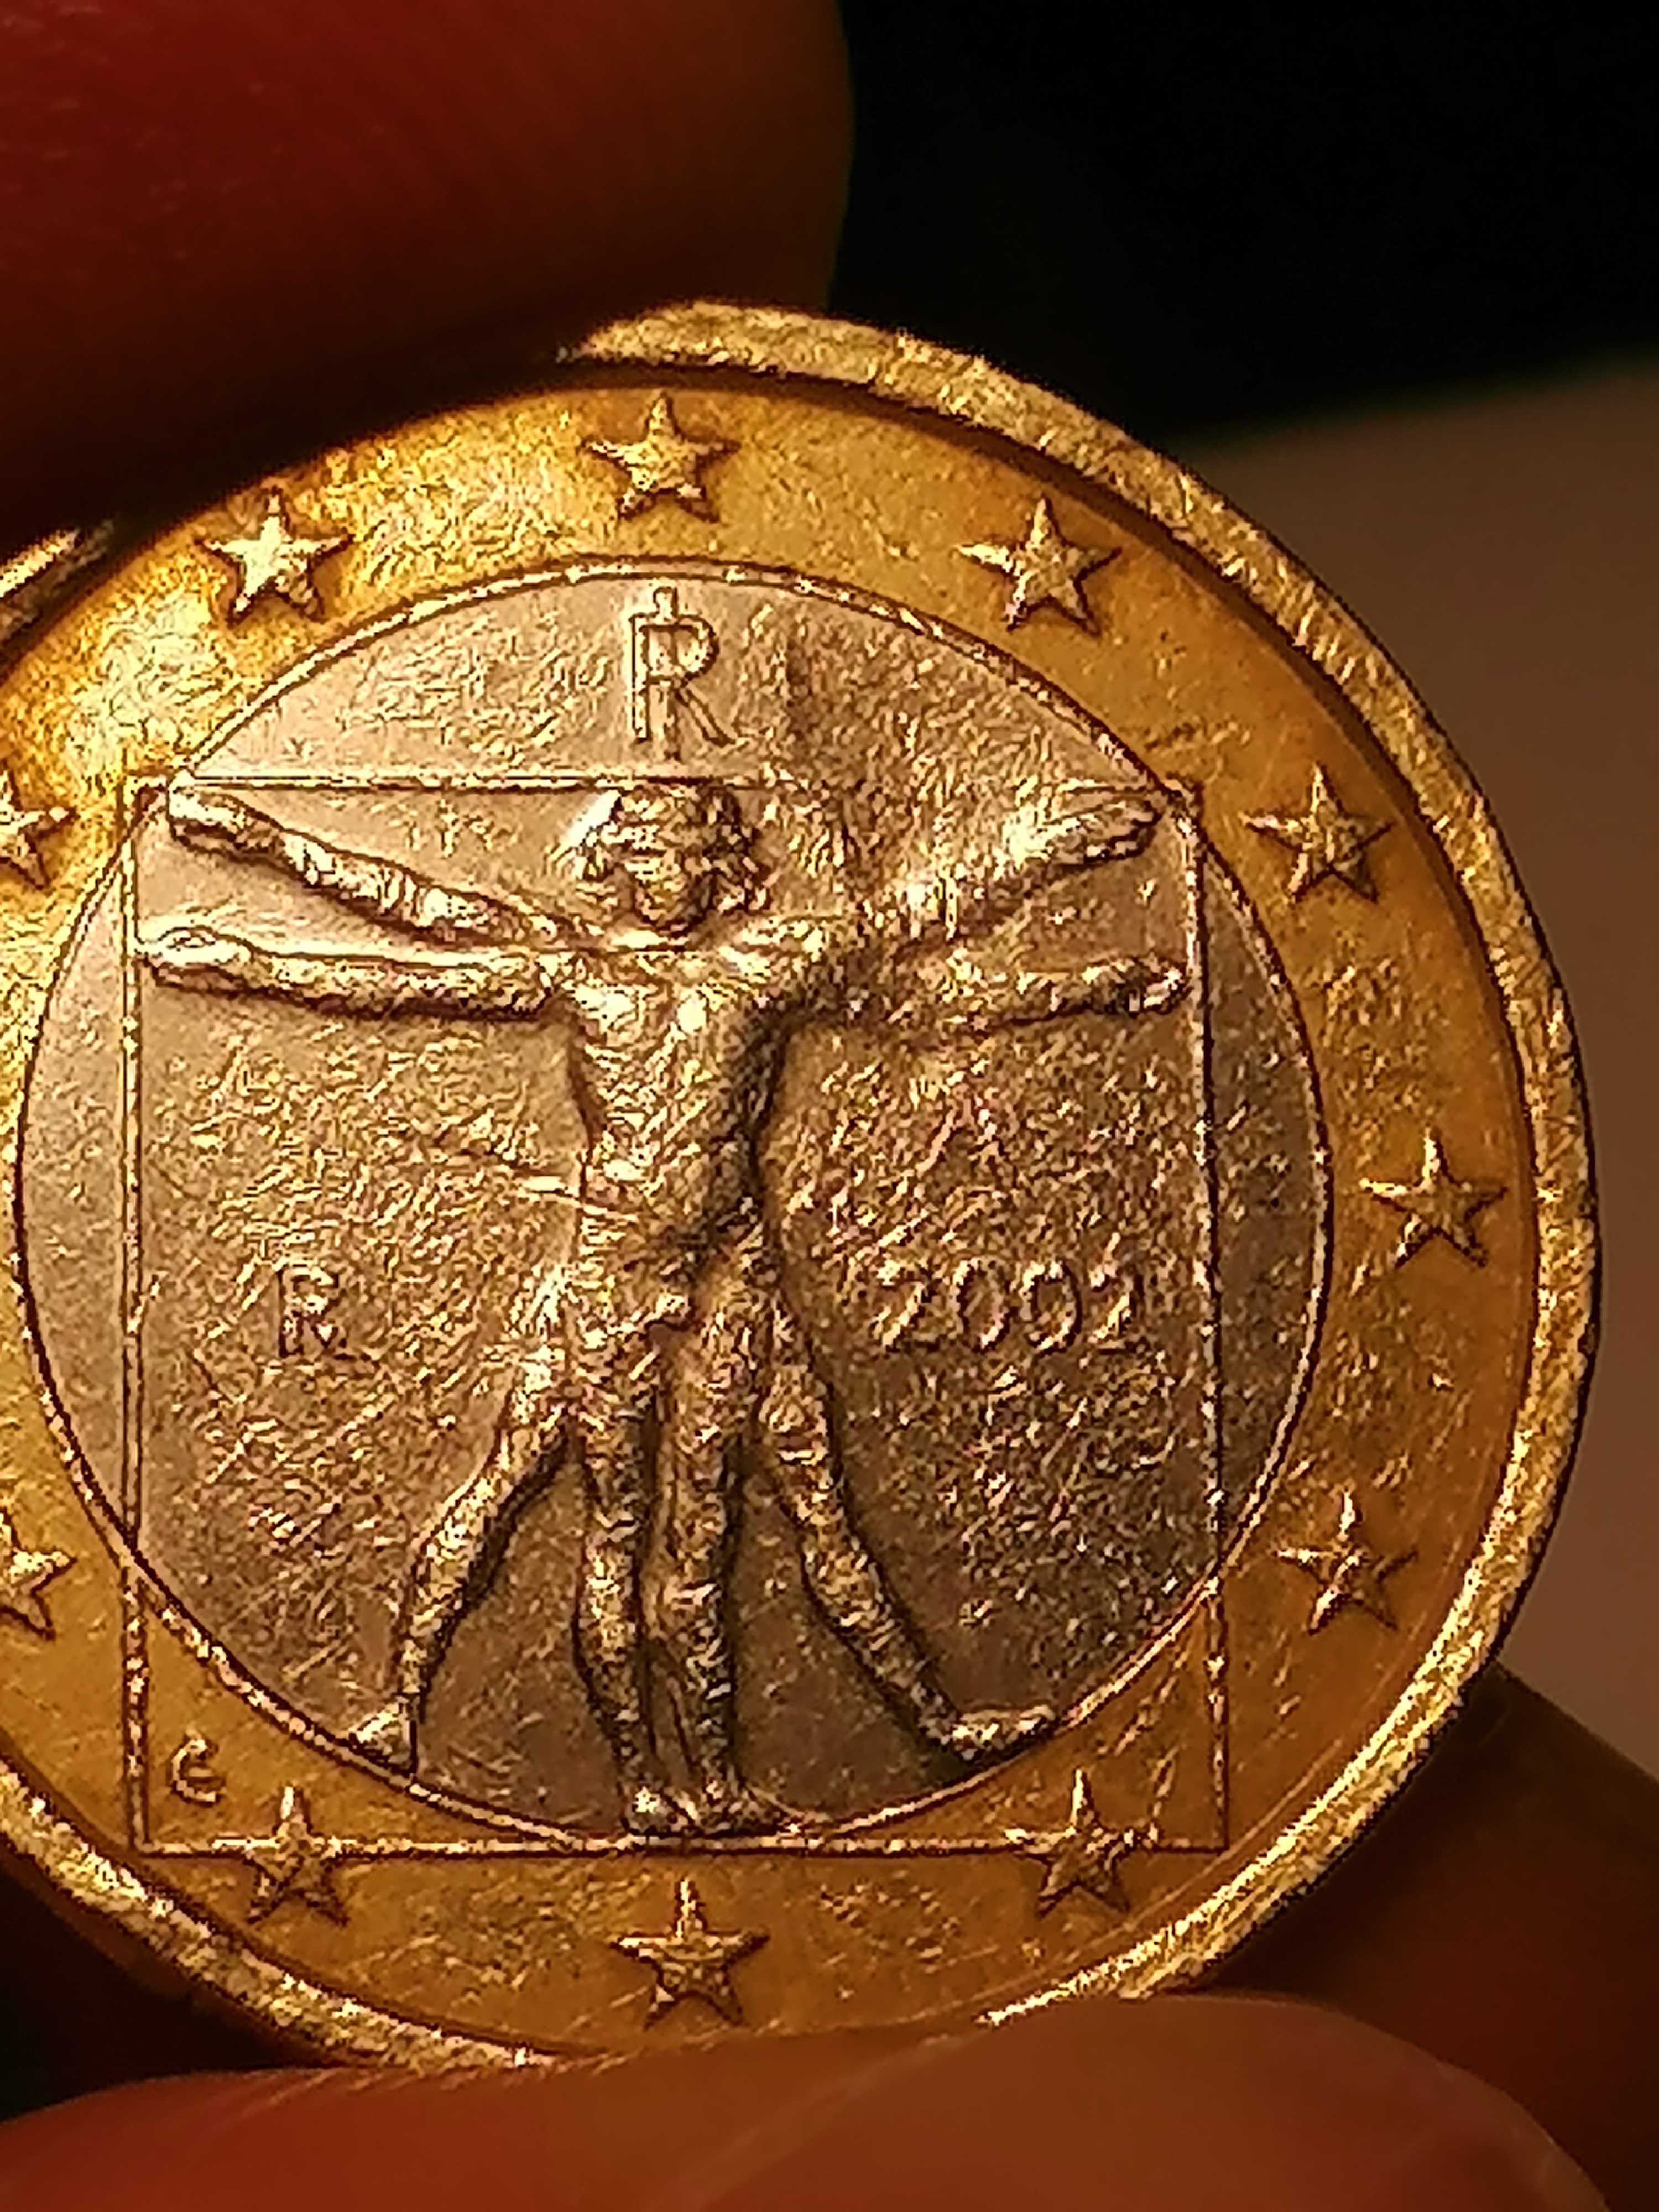 Vand moneda 1 Euro rara, comemorativa Italia 2002 cu defect de batere.